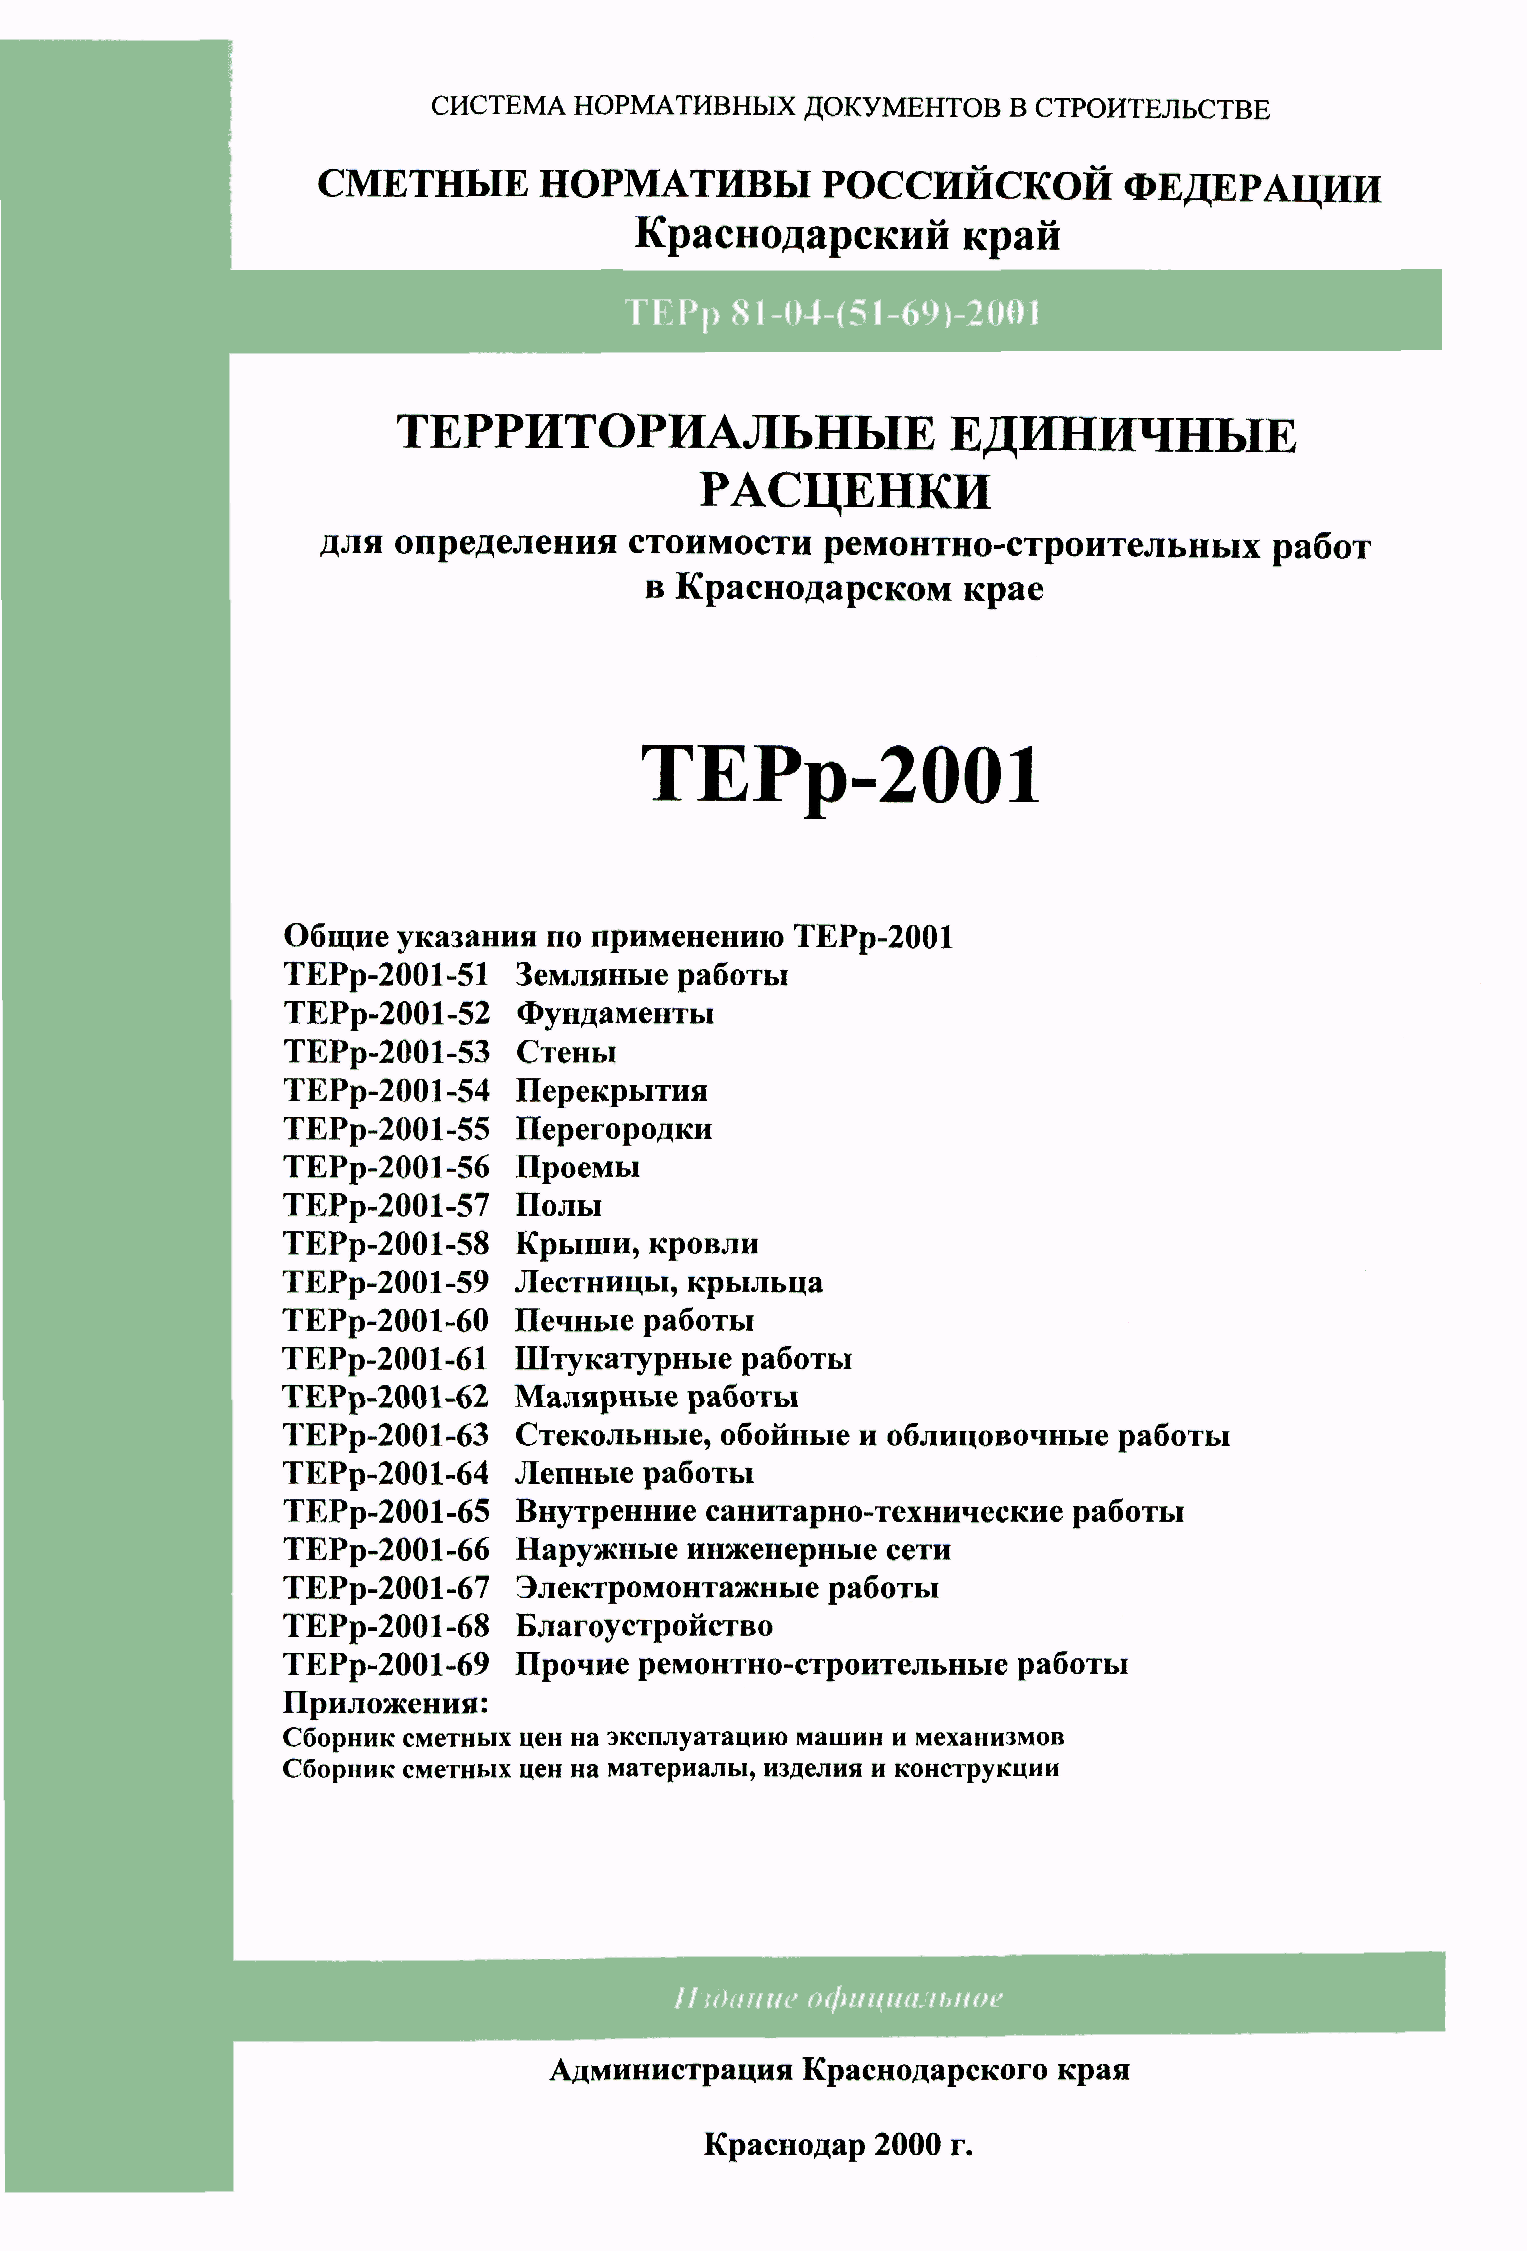 ТЕРр Краснодарский край 2001-55